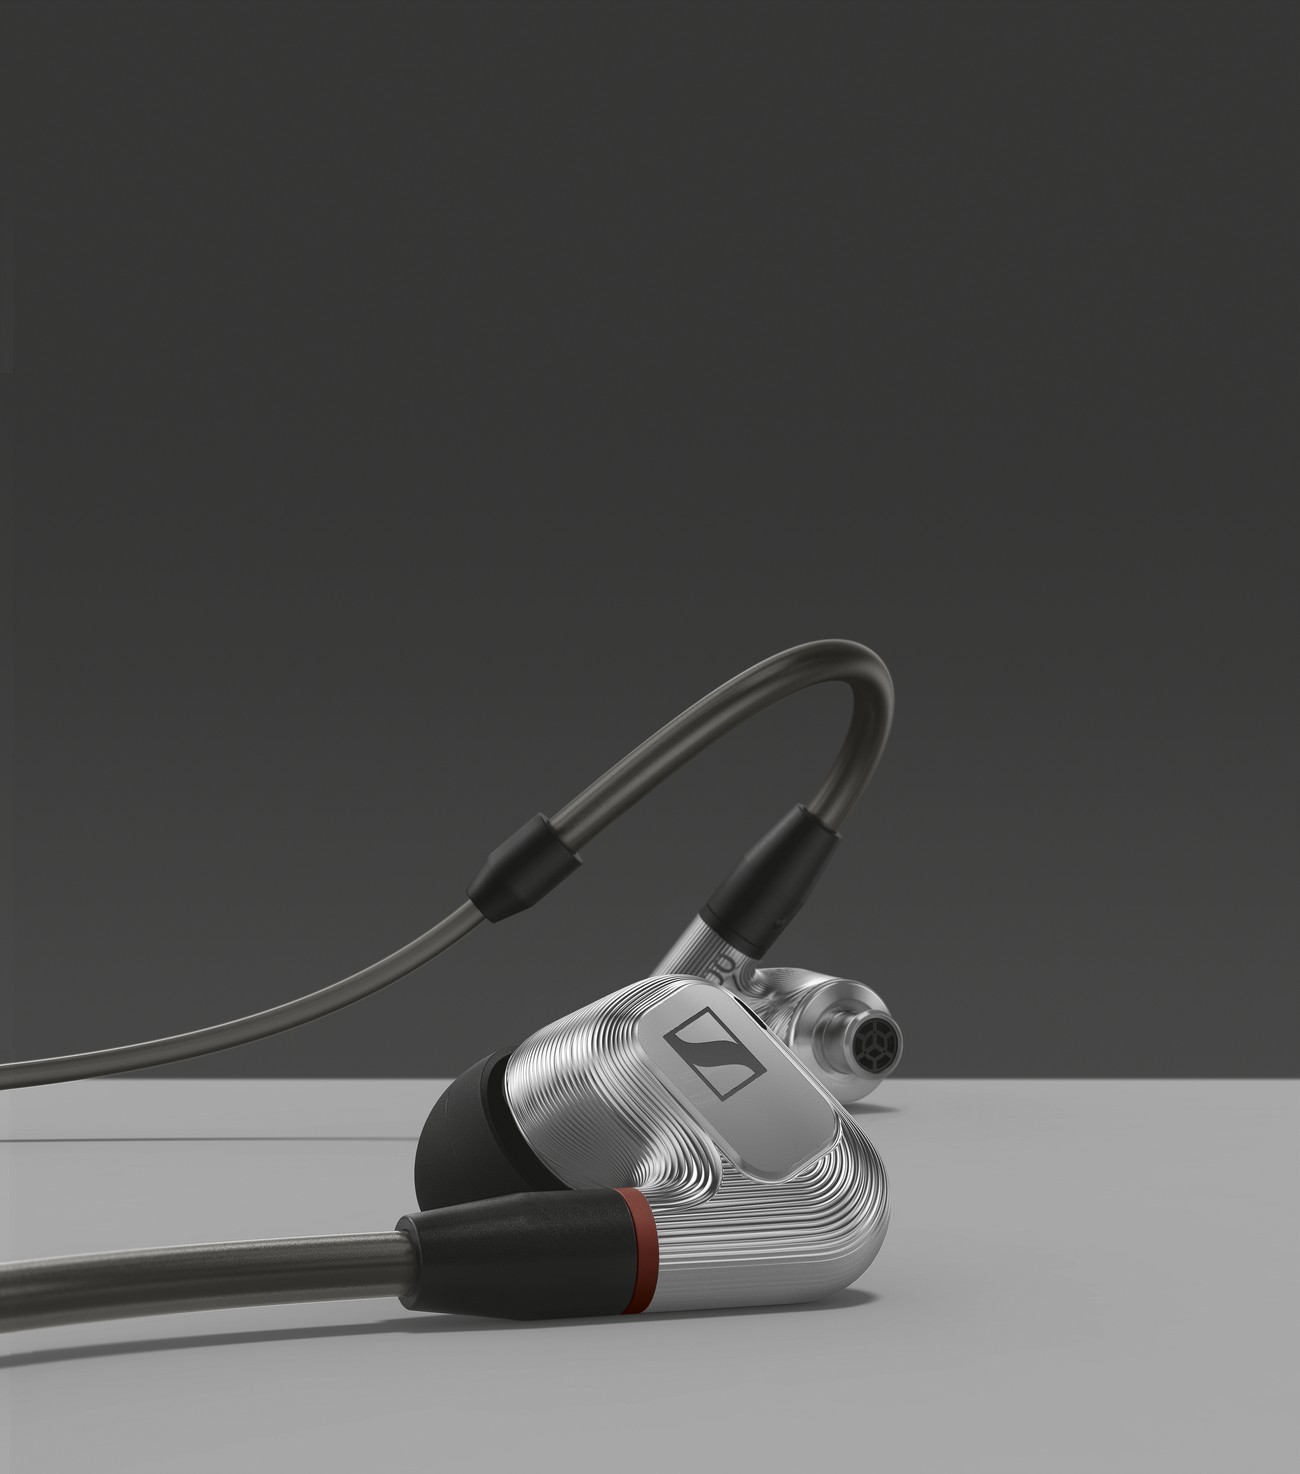 Sennheiser ra mắt mẫu tai nghe in ear cao cấp IE 900